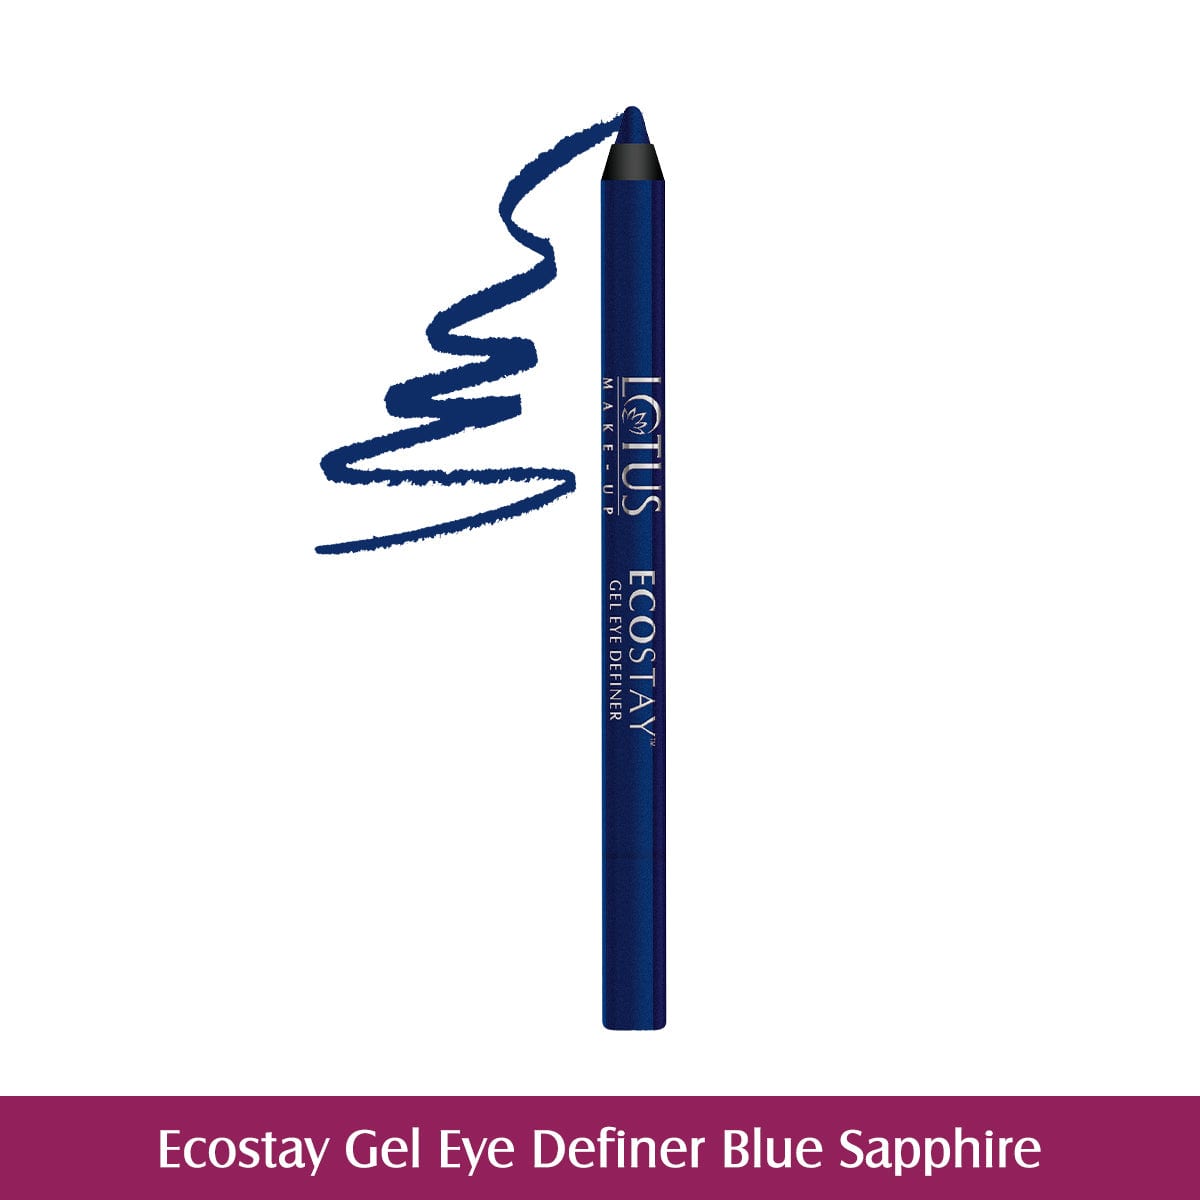 Lotus Ecostay Longlasting Gel Eye Definer - Blue Sapphire